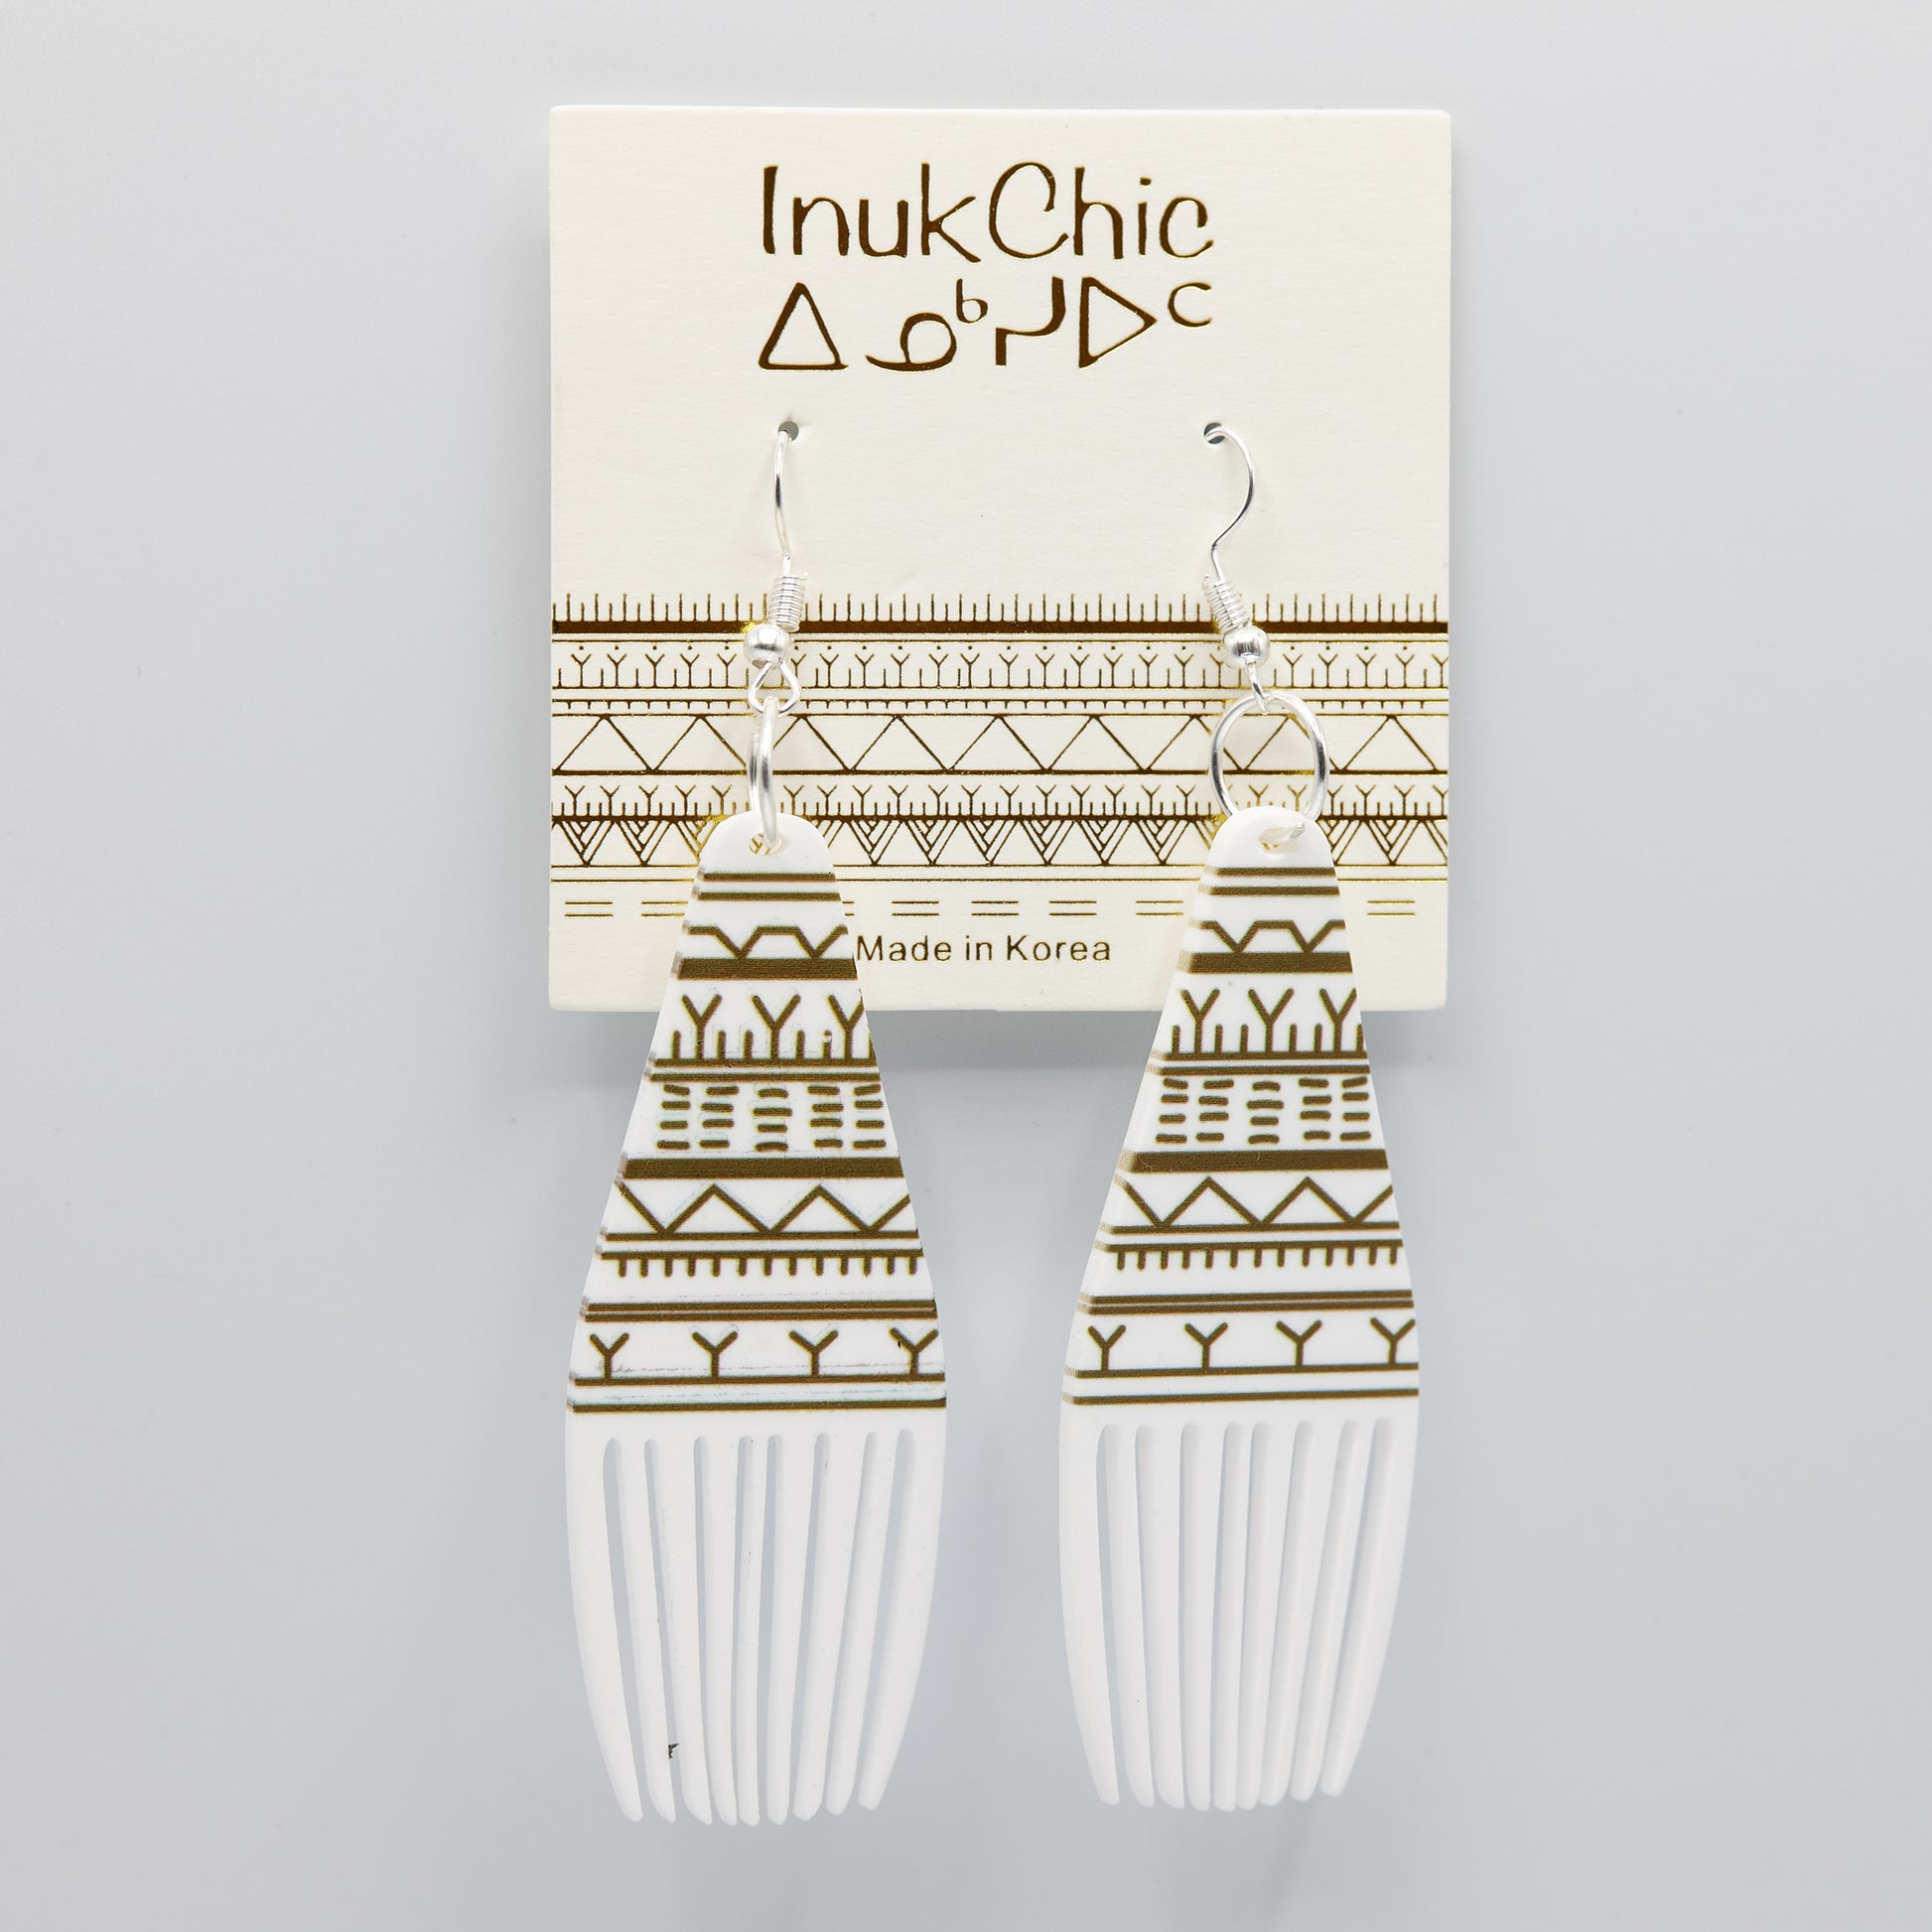 InukChic® Earring - Illaiguti Kakiniliik - White (pair)